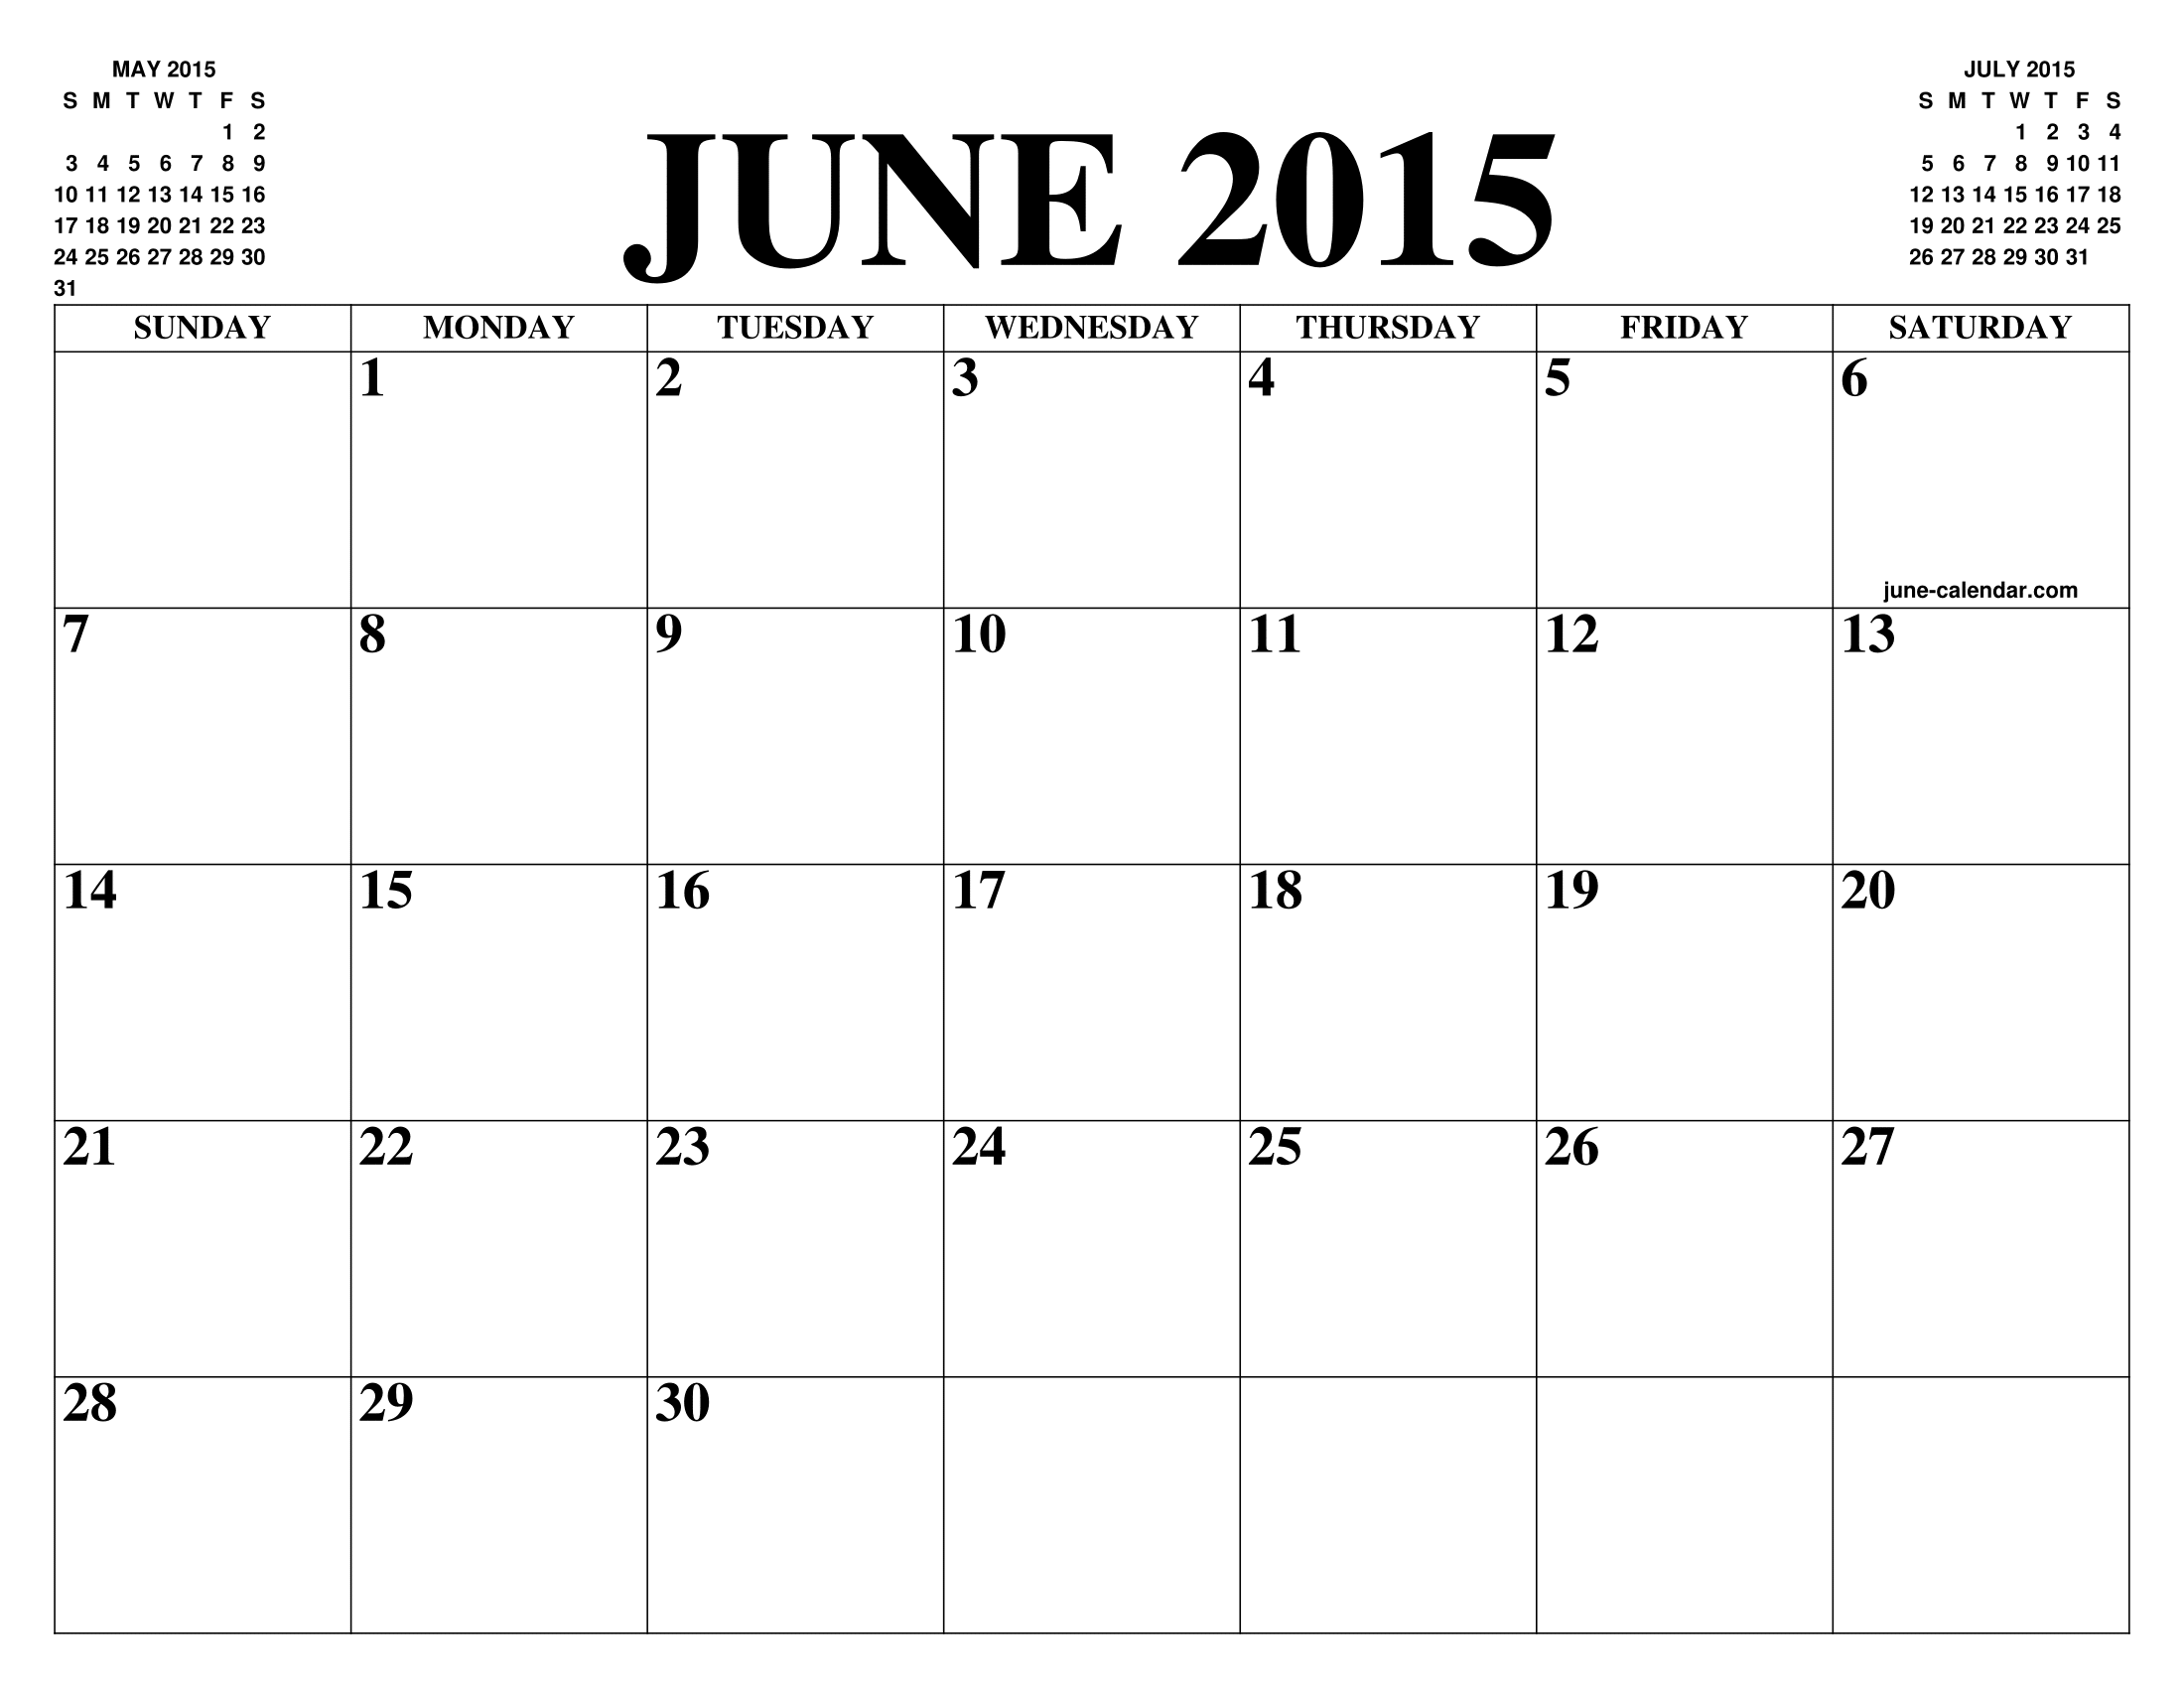 JUNE 2015 CALENDAR OF THE MONTH: FREE PRINTABLE JUNE CALENDAR OF THE YEAR -  AGENDA